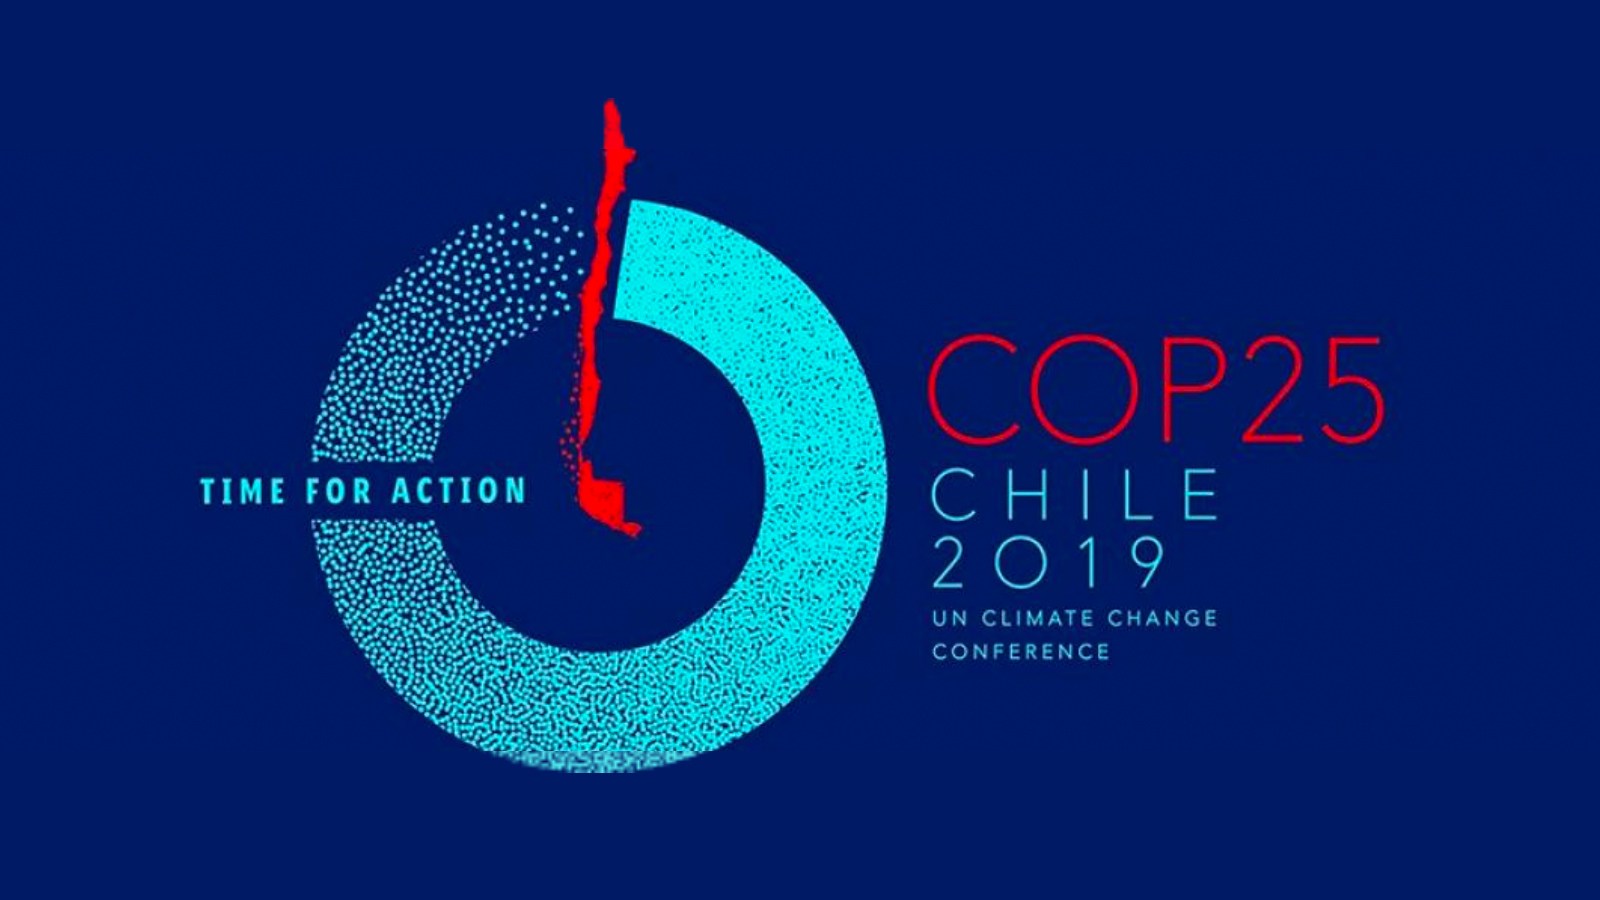 UNFCCC: In Preparation for COP 25